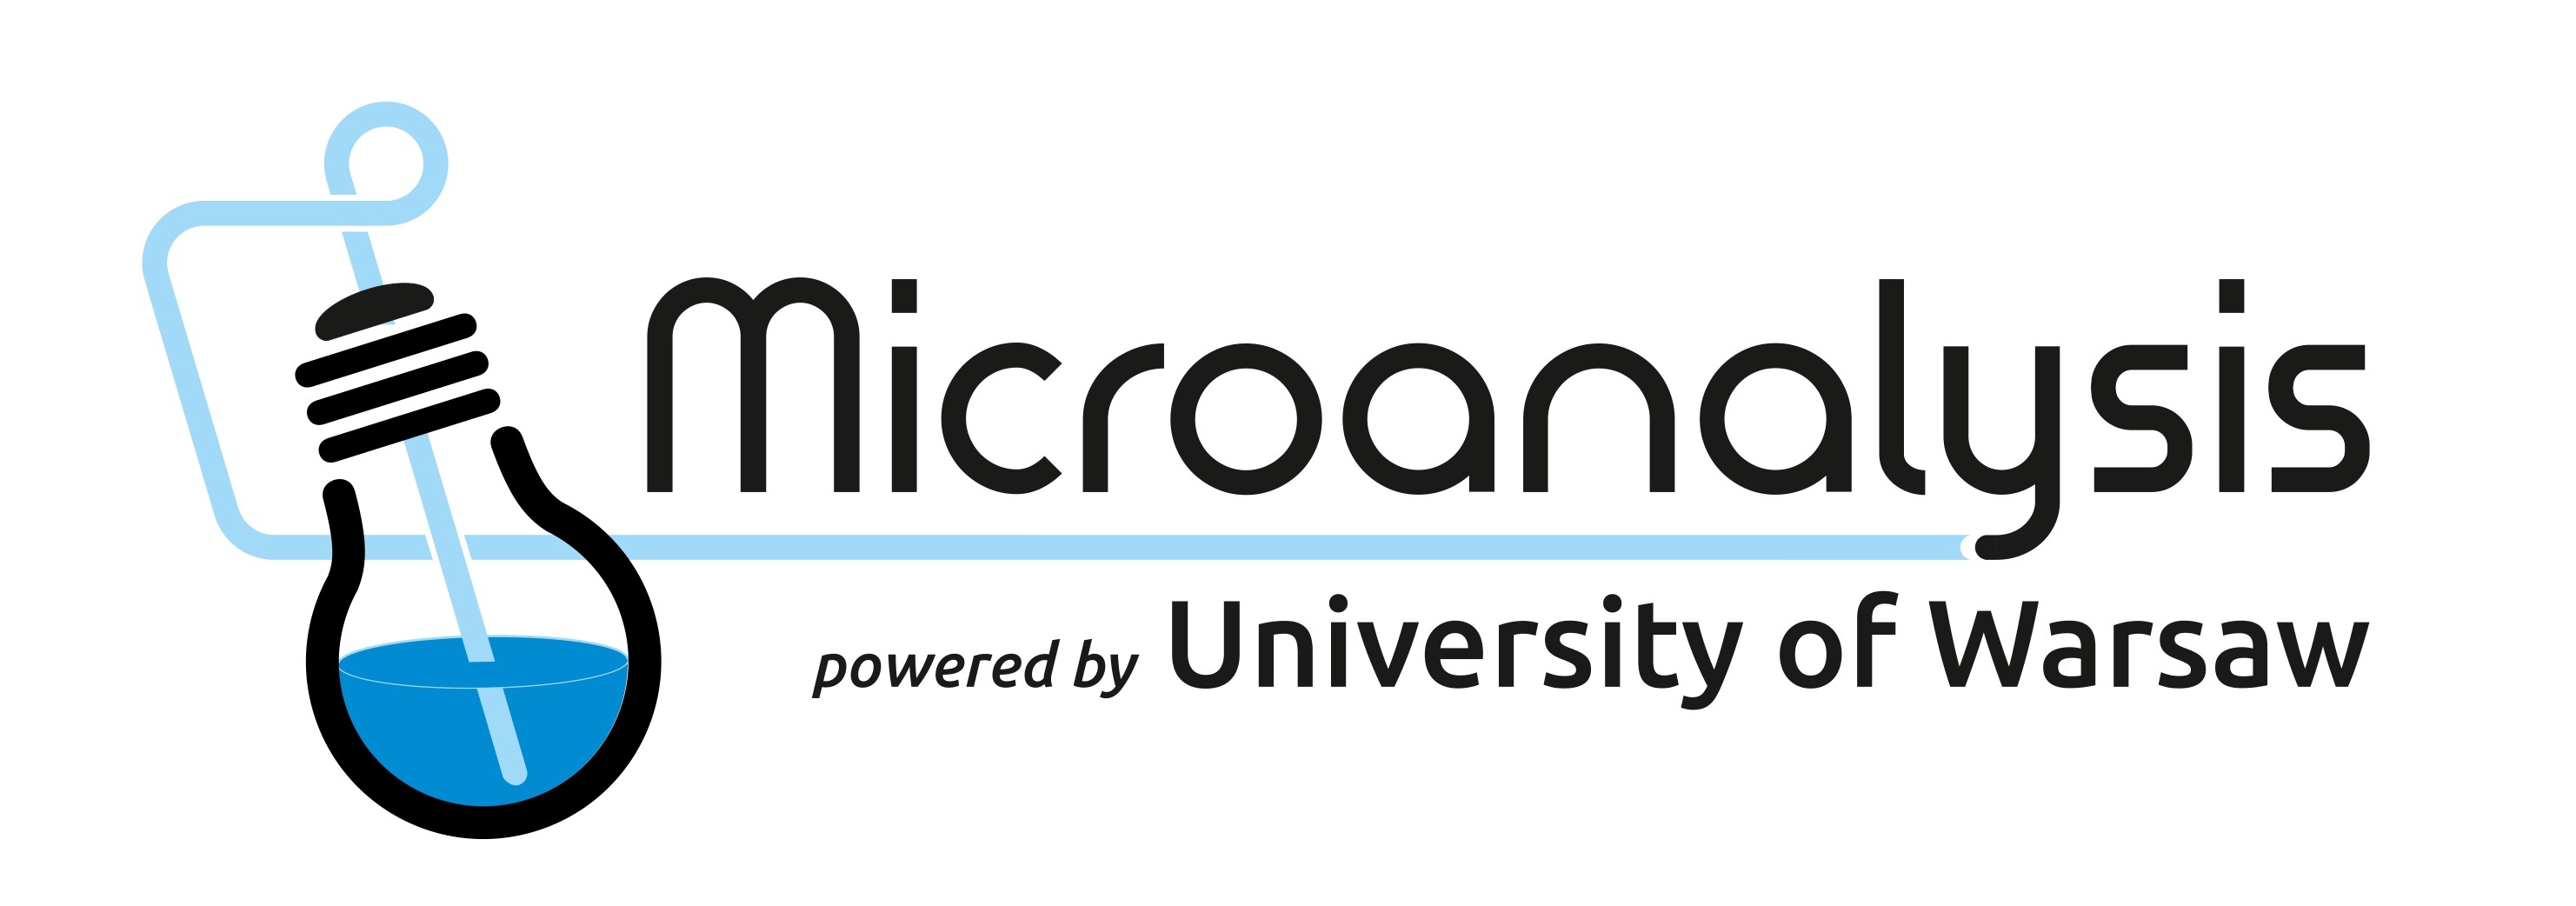 microanalysis logo.jpg